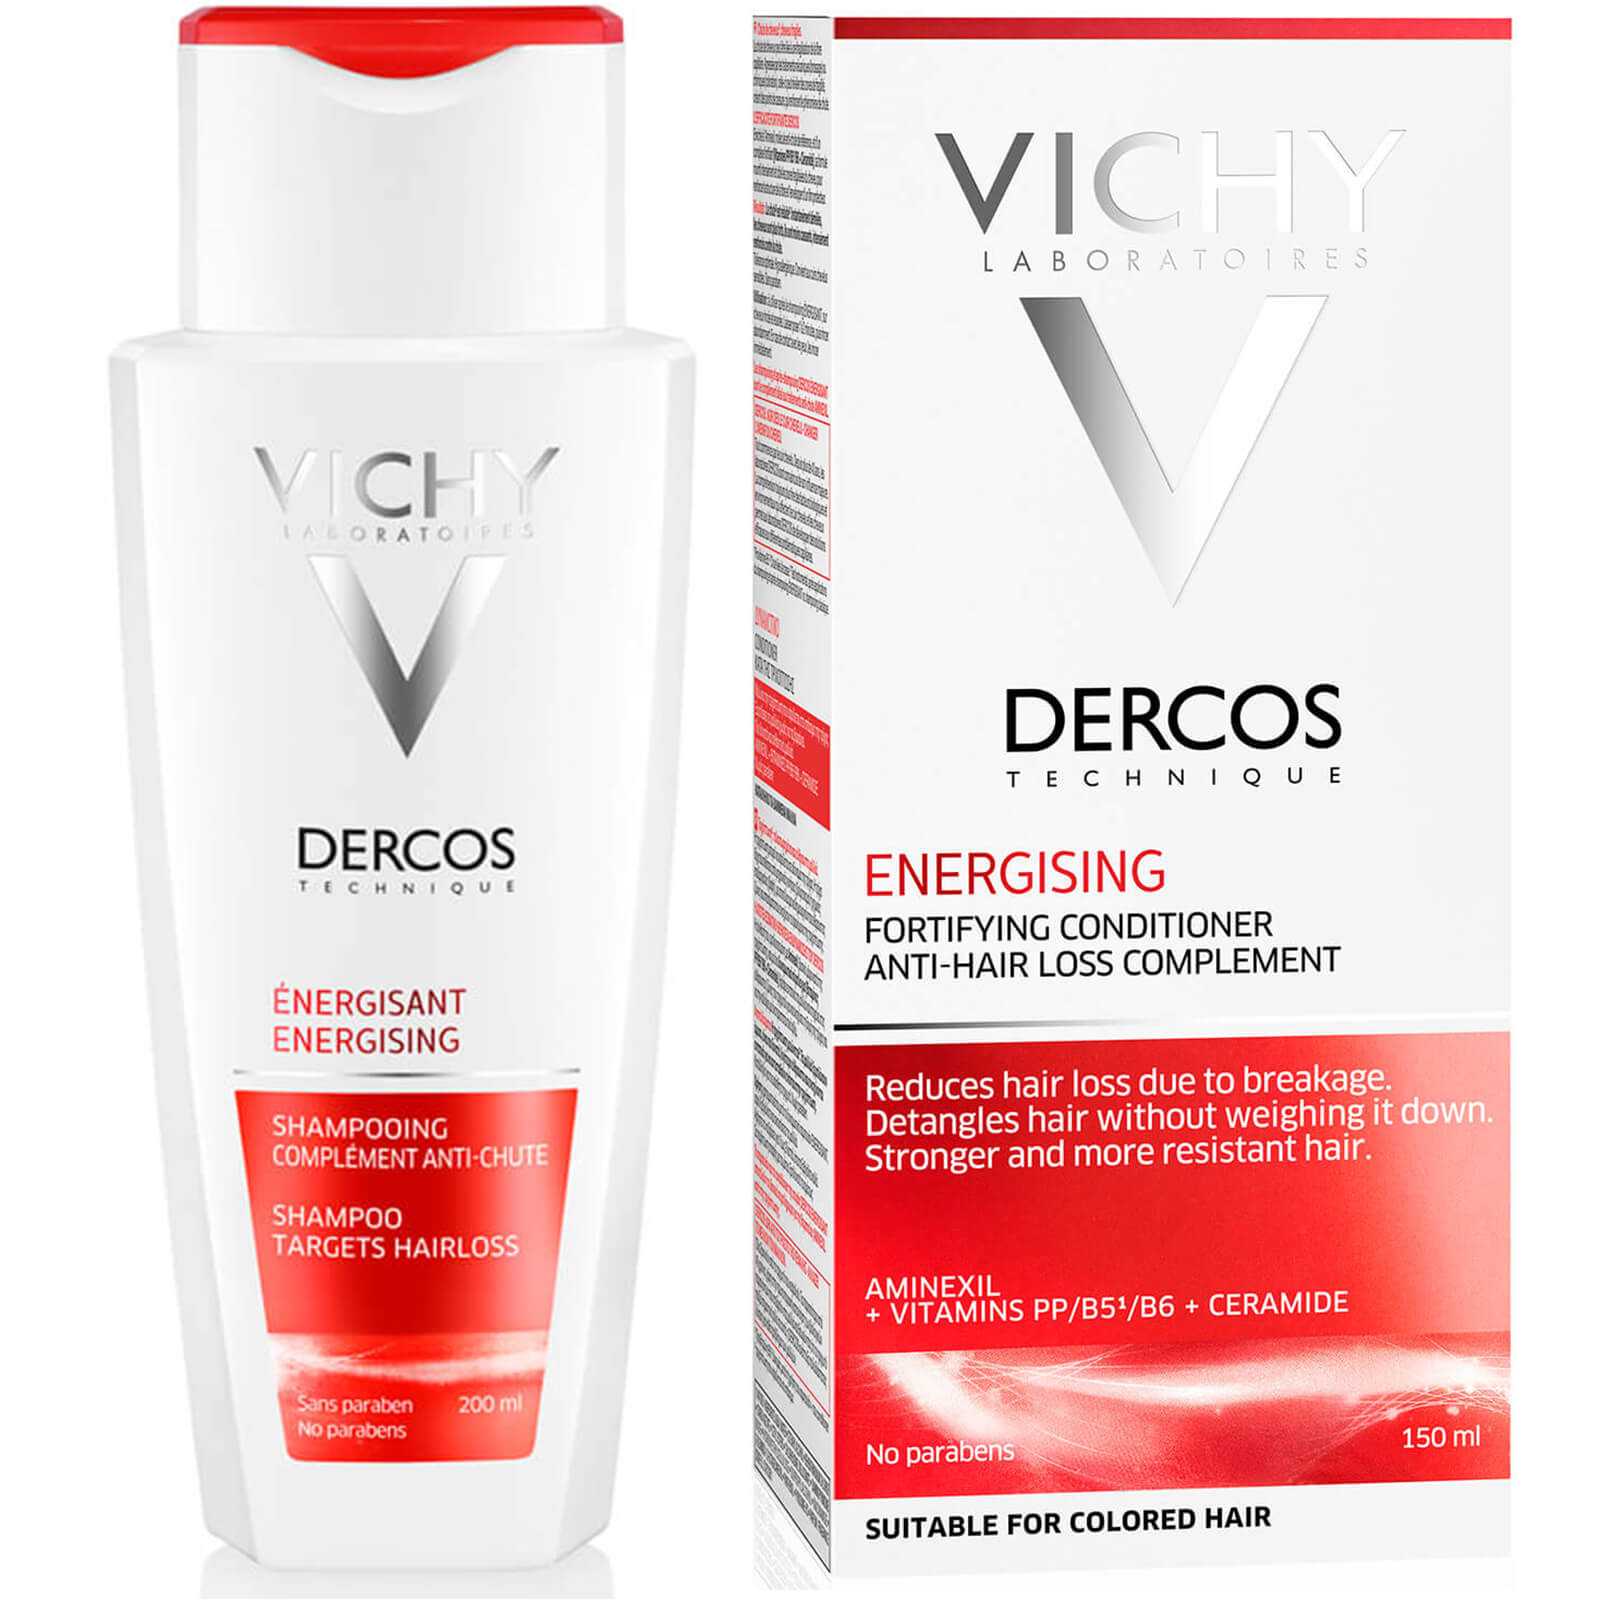 Vichy dercos energisant shampooing complément anti-chute, 200 ML